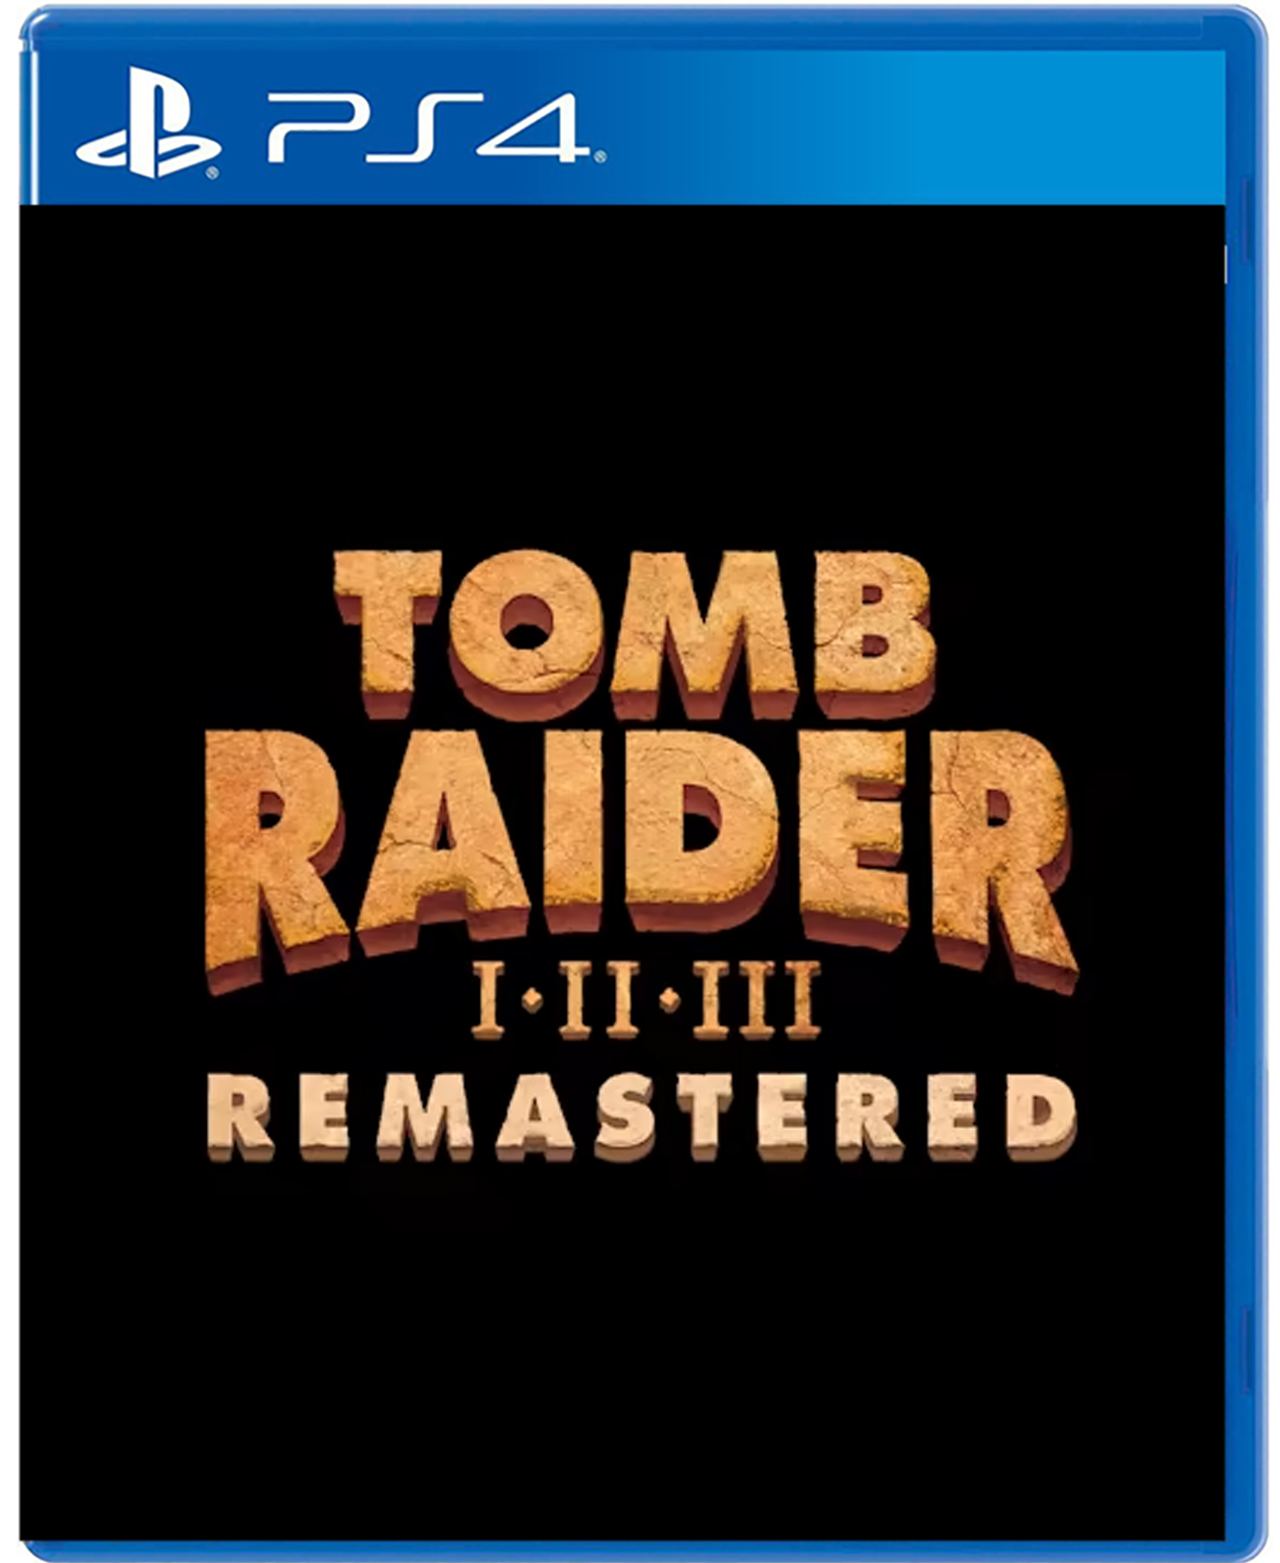 Tomb Raider I-III Remastered Starring Lara Croft for PlayStation 4